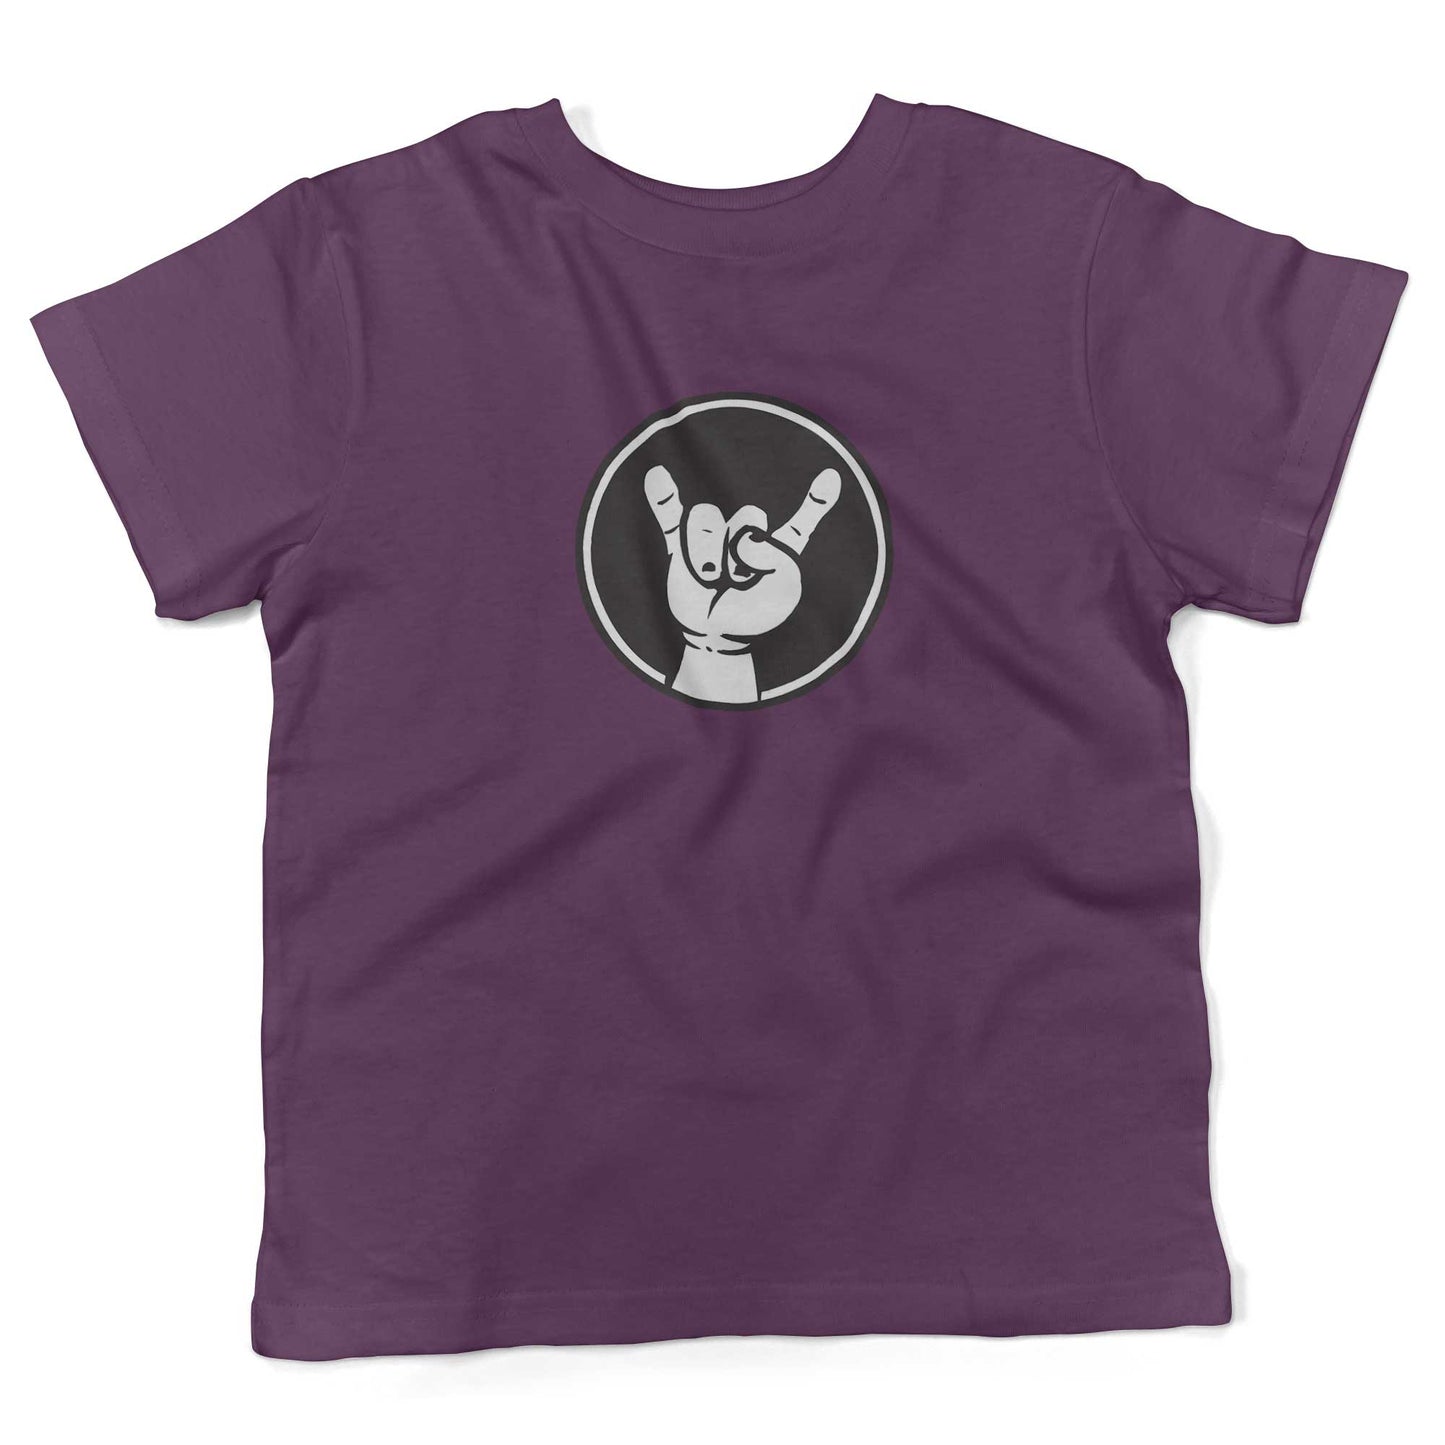 Rock Hand Symbol Toddler Shirt-Organic Purple-2T